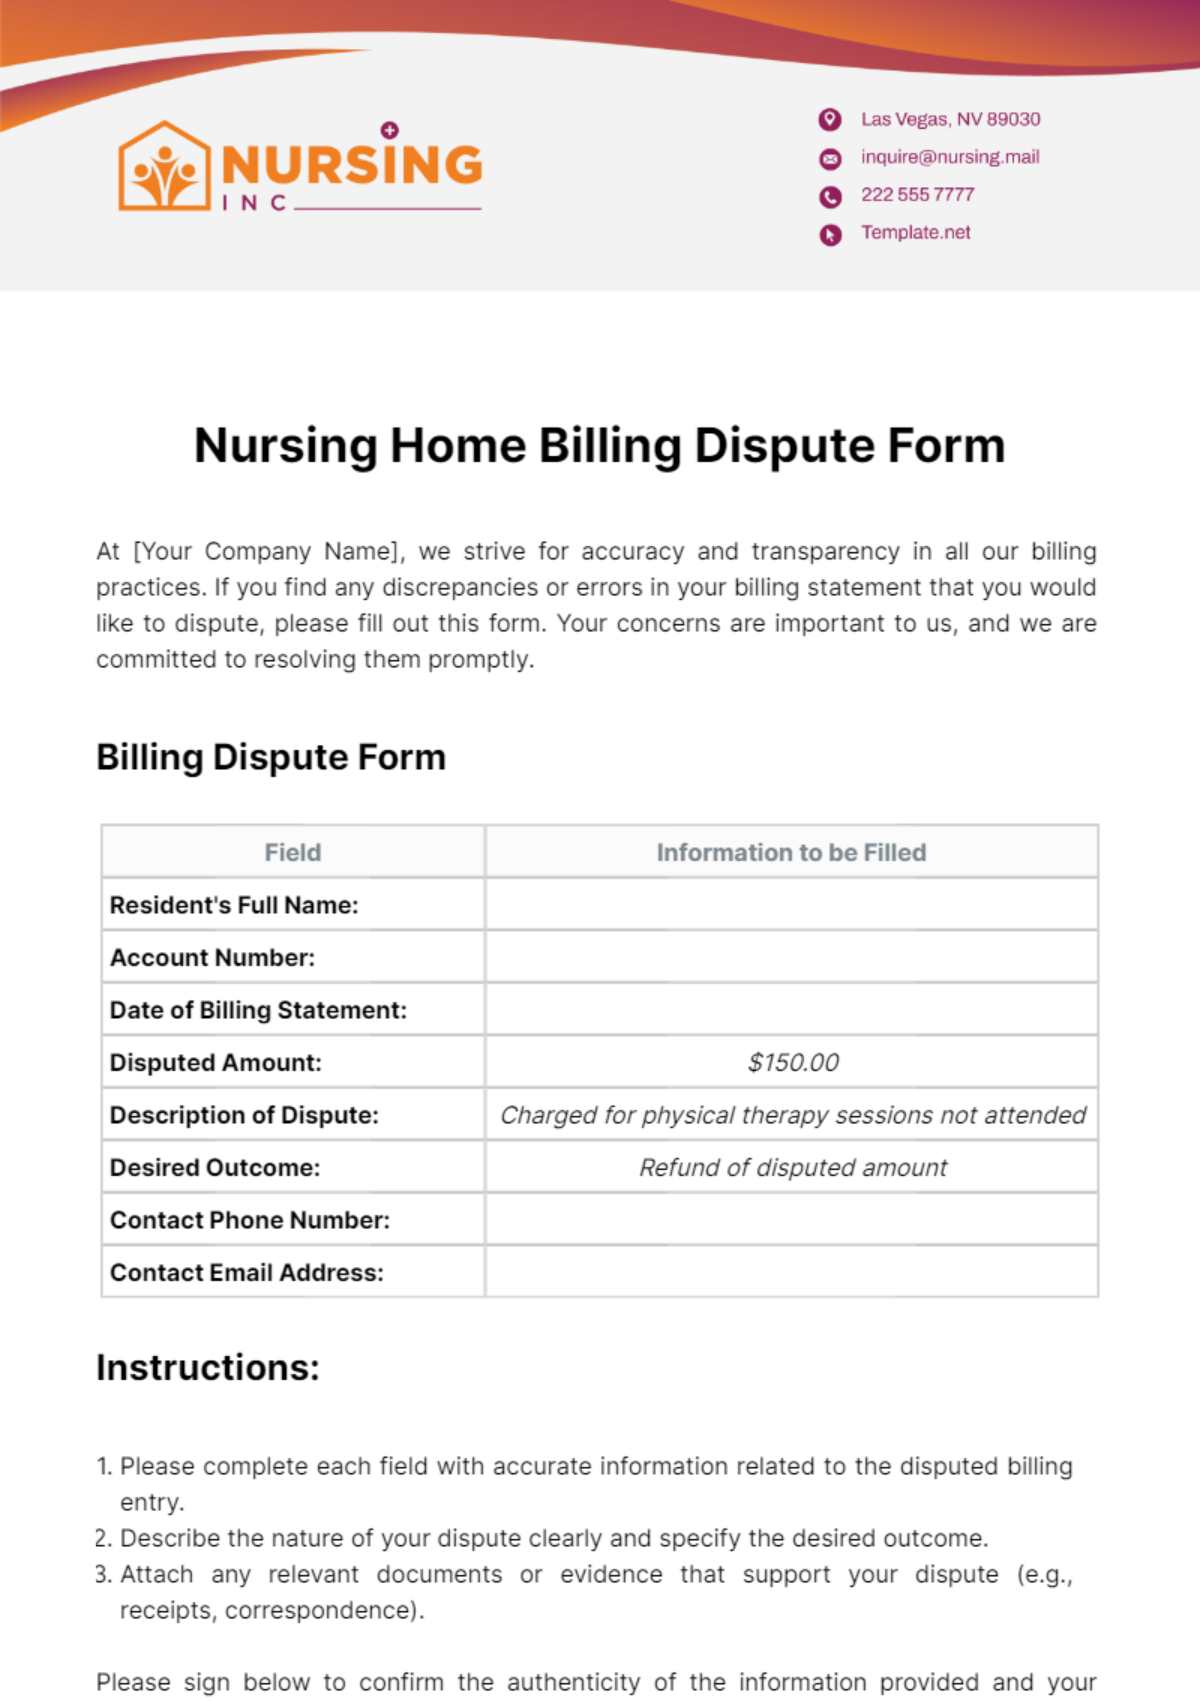 Free Nursing Home Billing Dispute Form Template